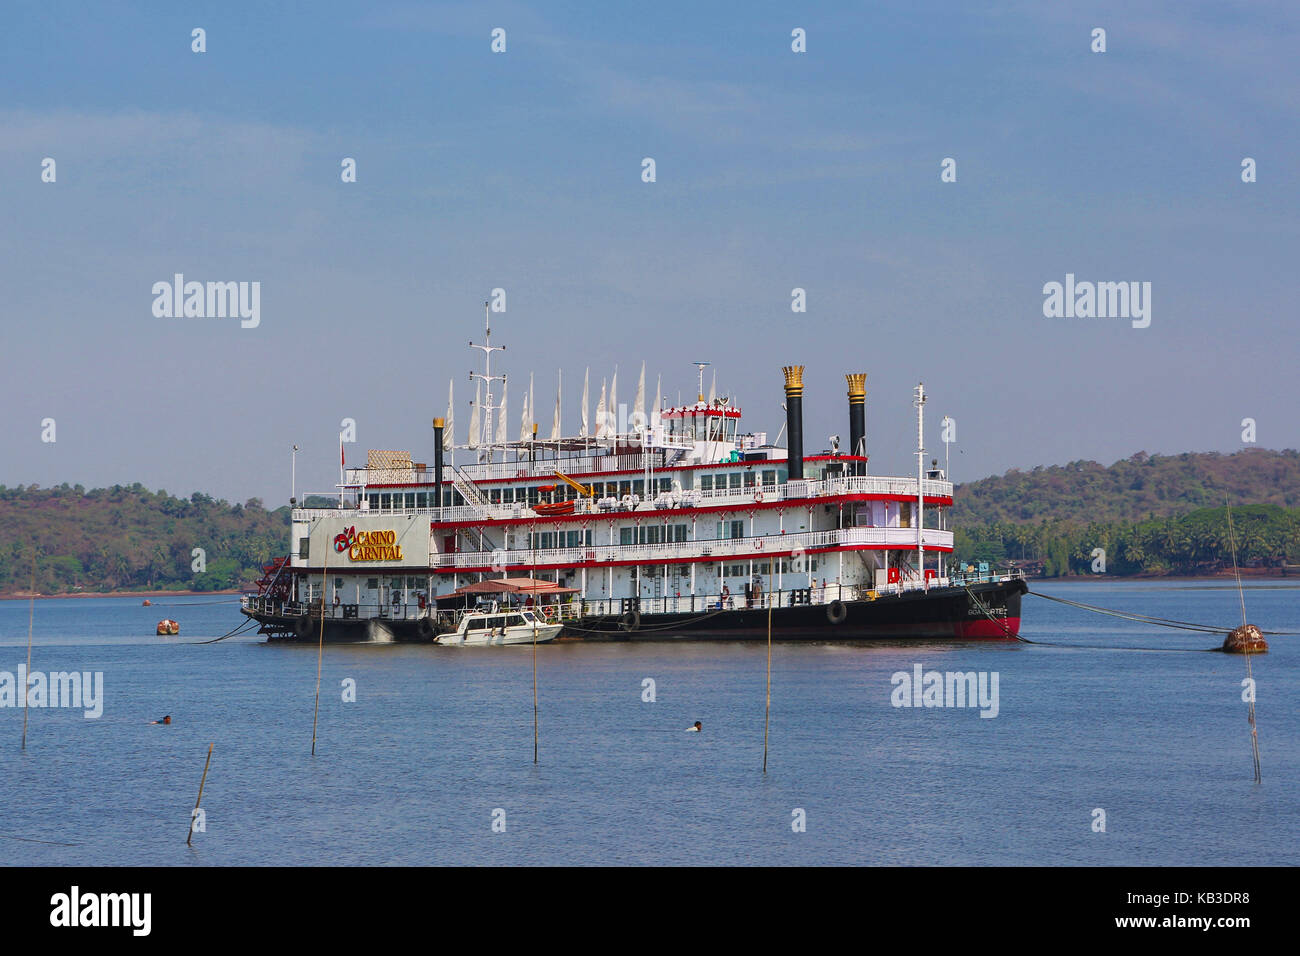 India, Goa, Panjim, casino ship on the river Stock Photo